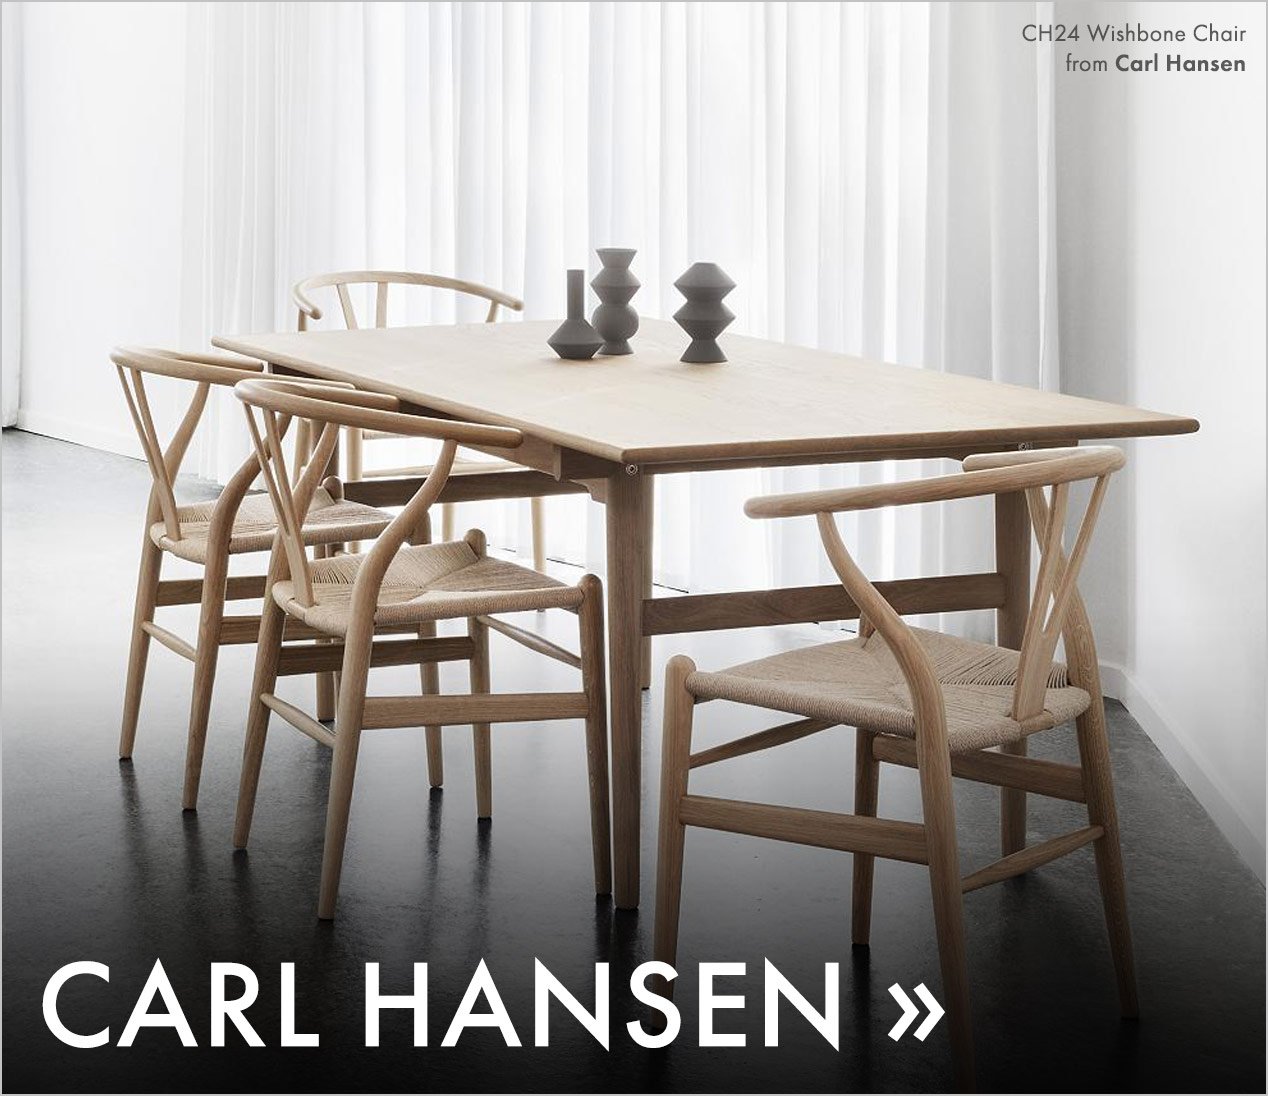 Carl Hansen.